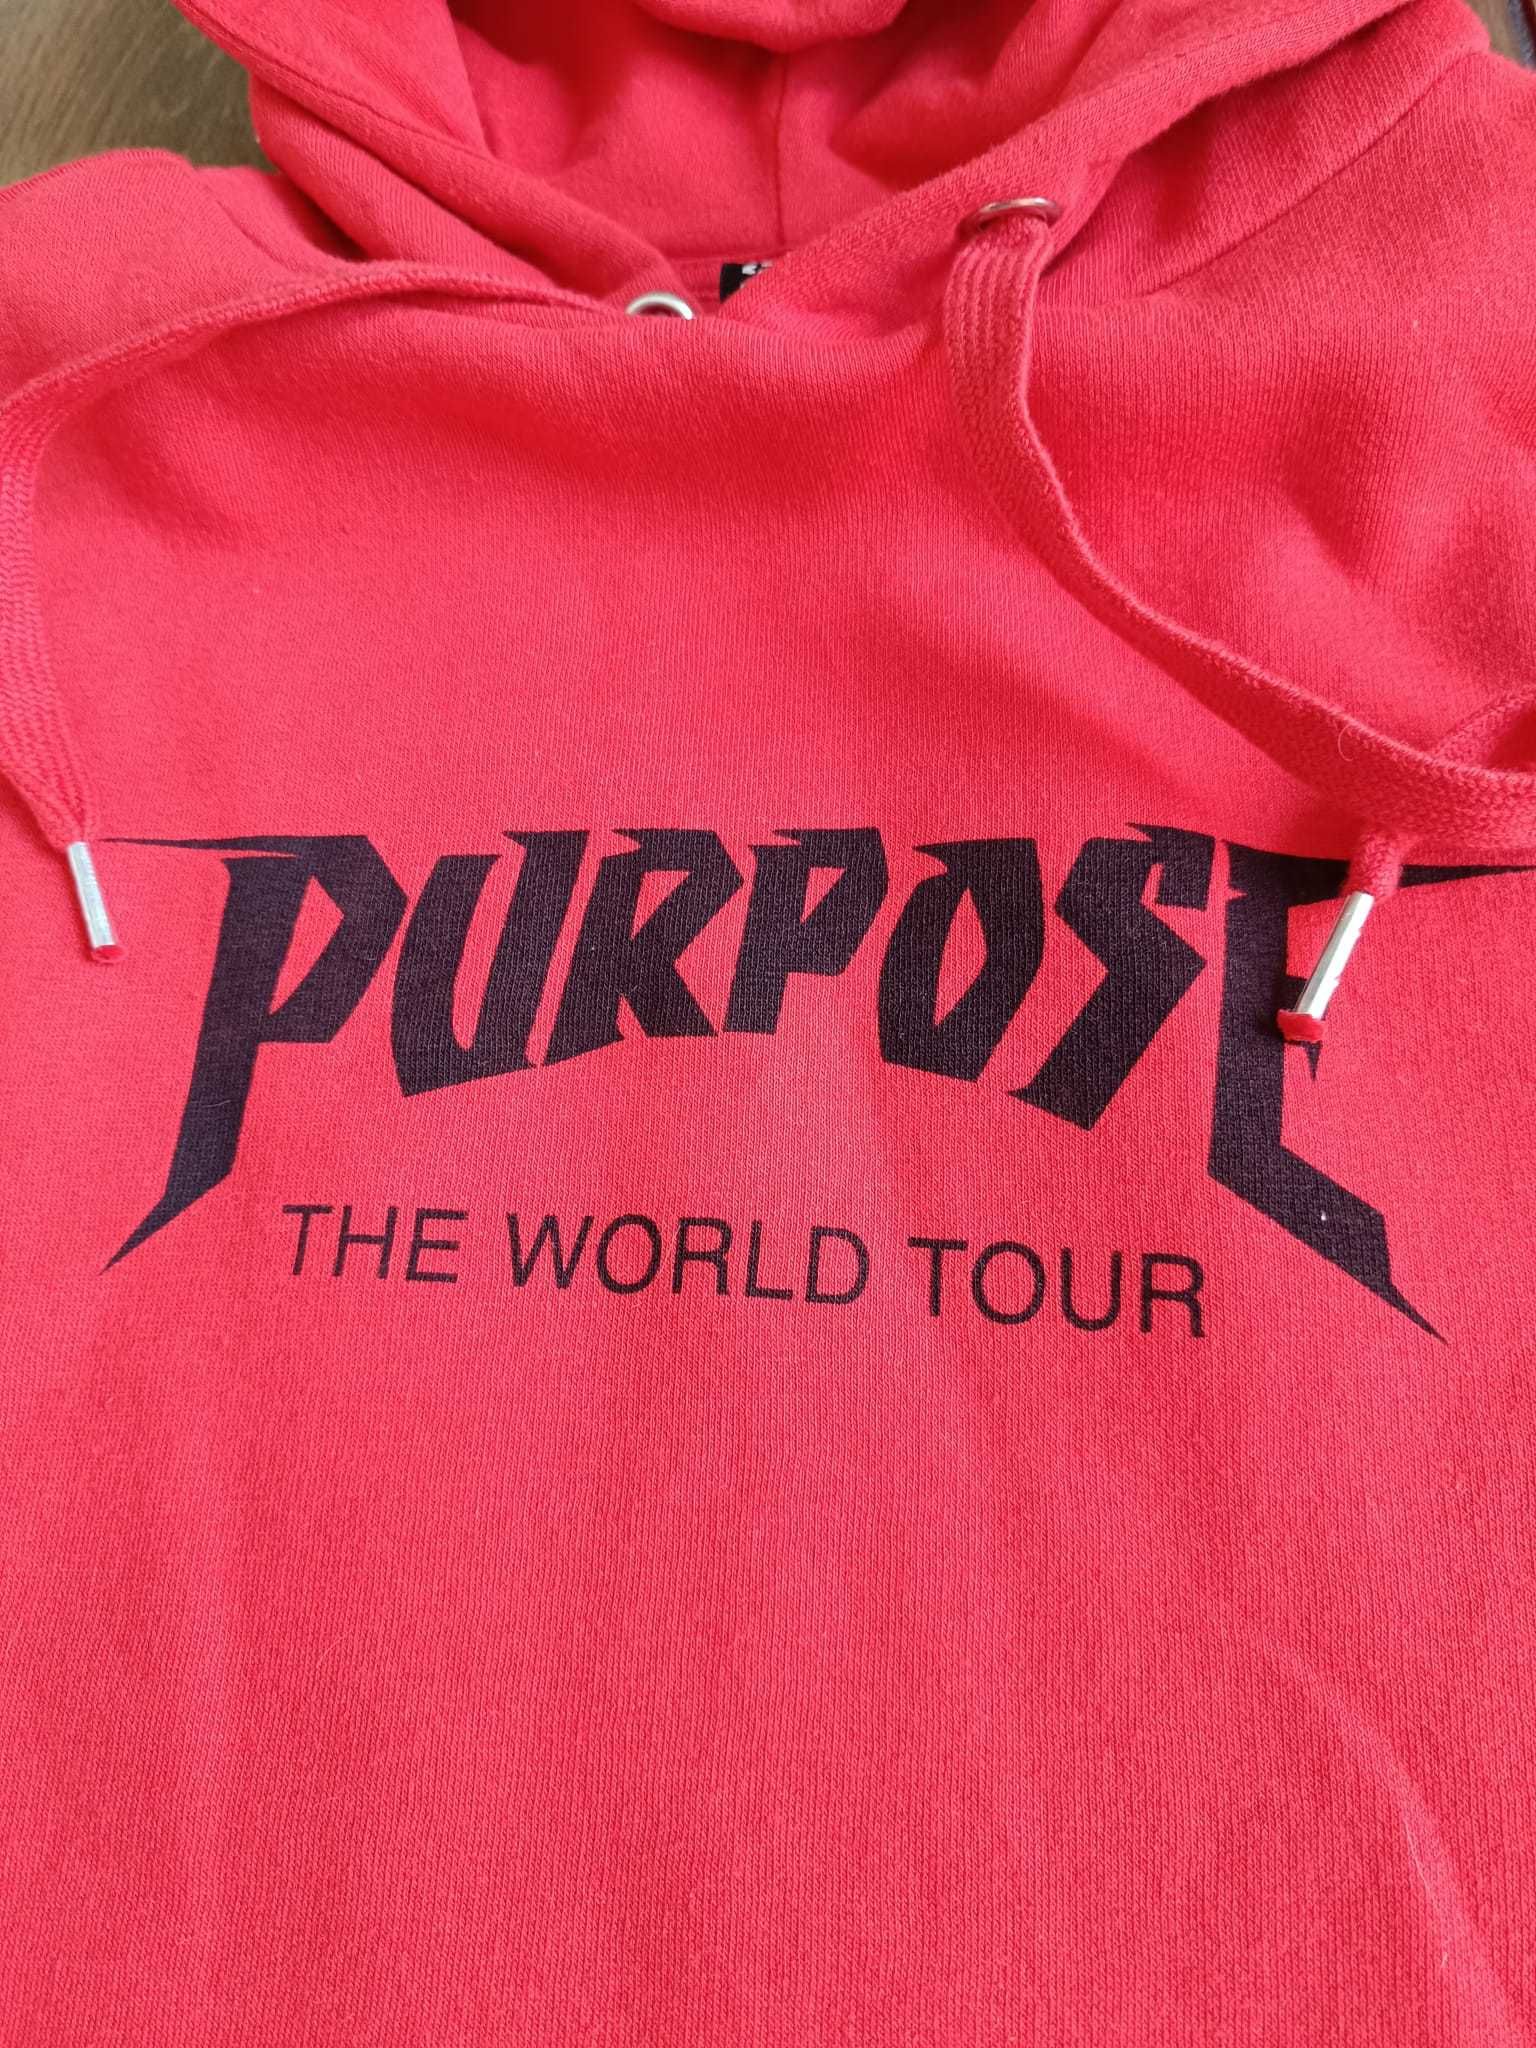 Justin Bieber Purpose World Tour HM rosu pufos XS bluza pulover crop